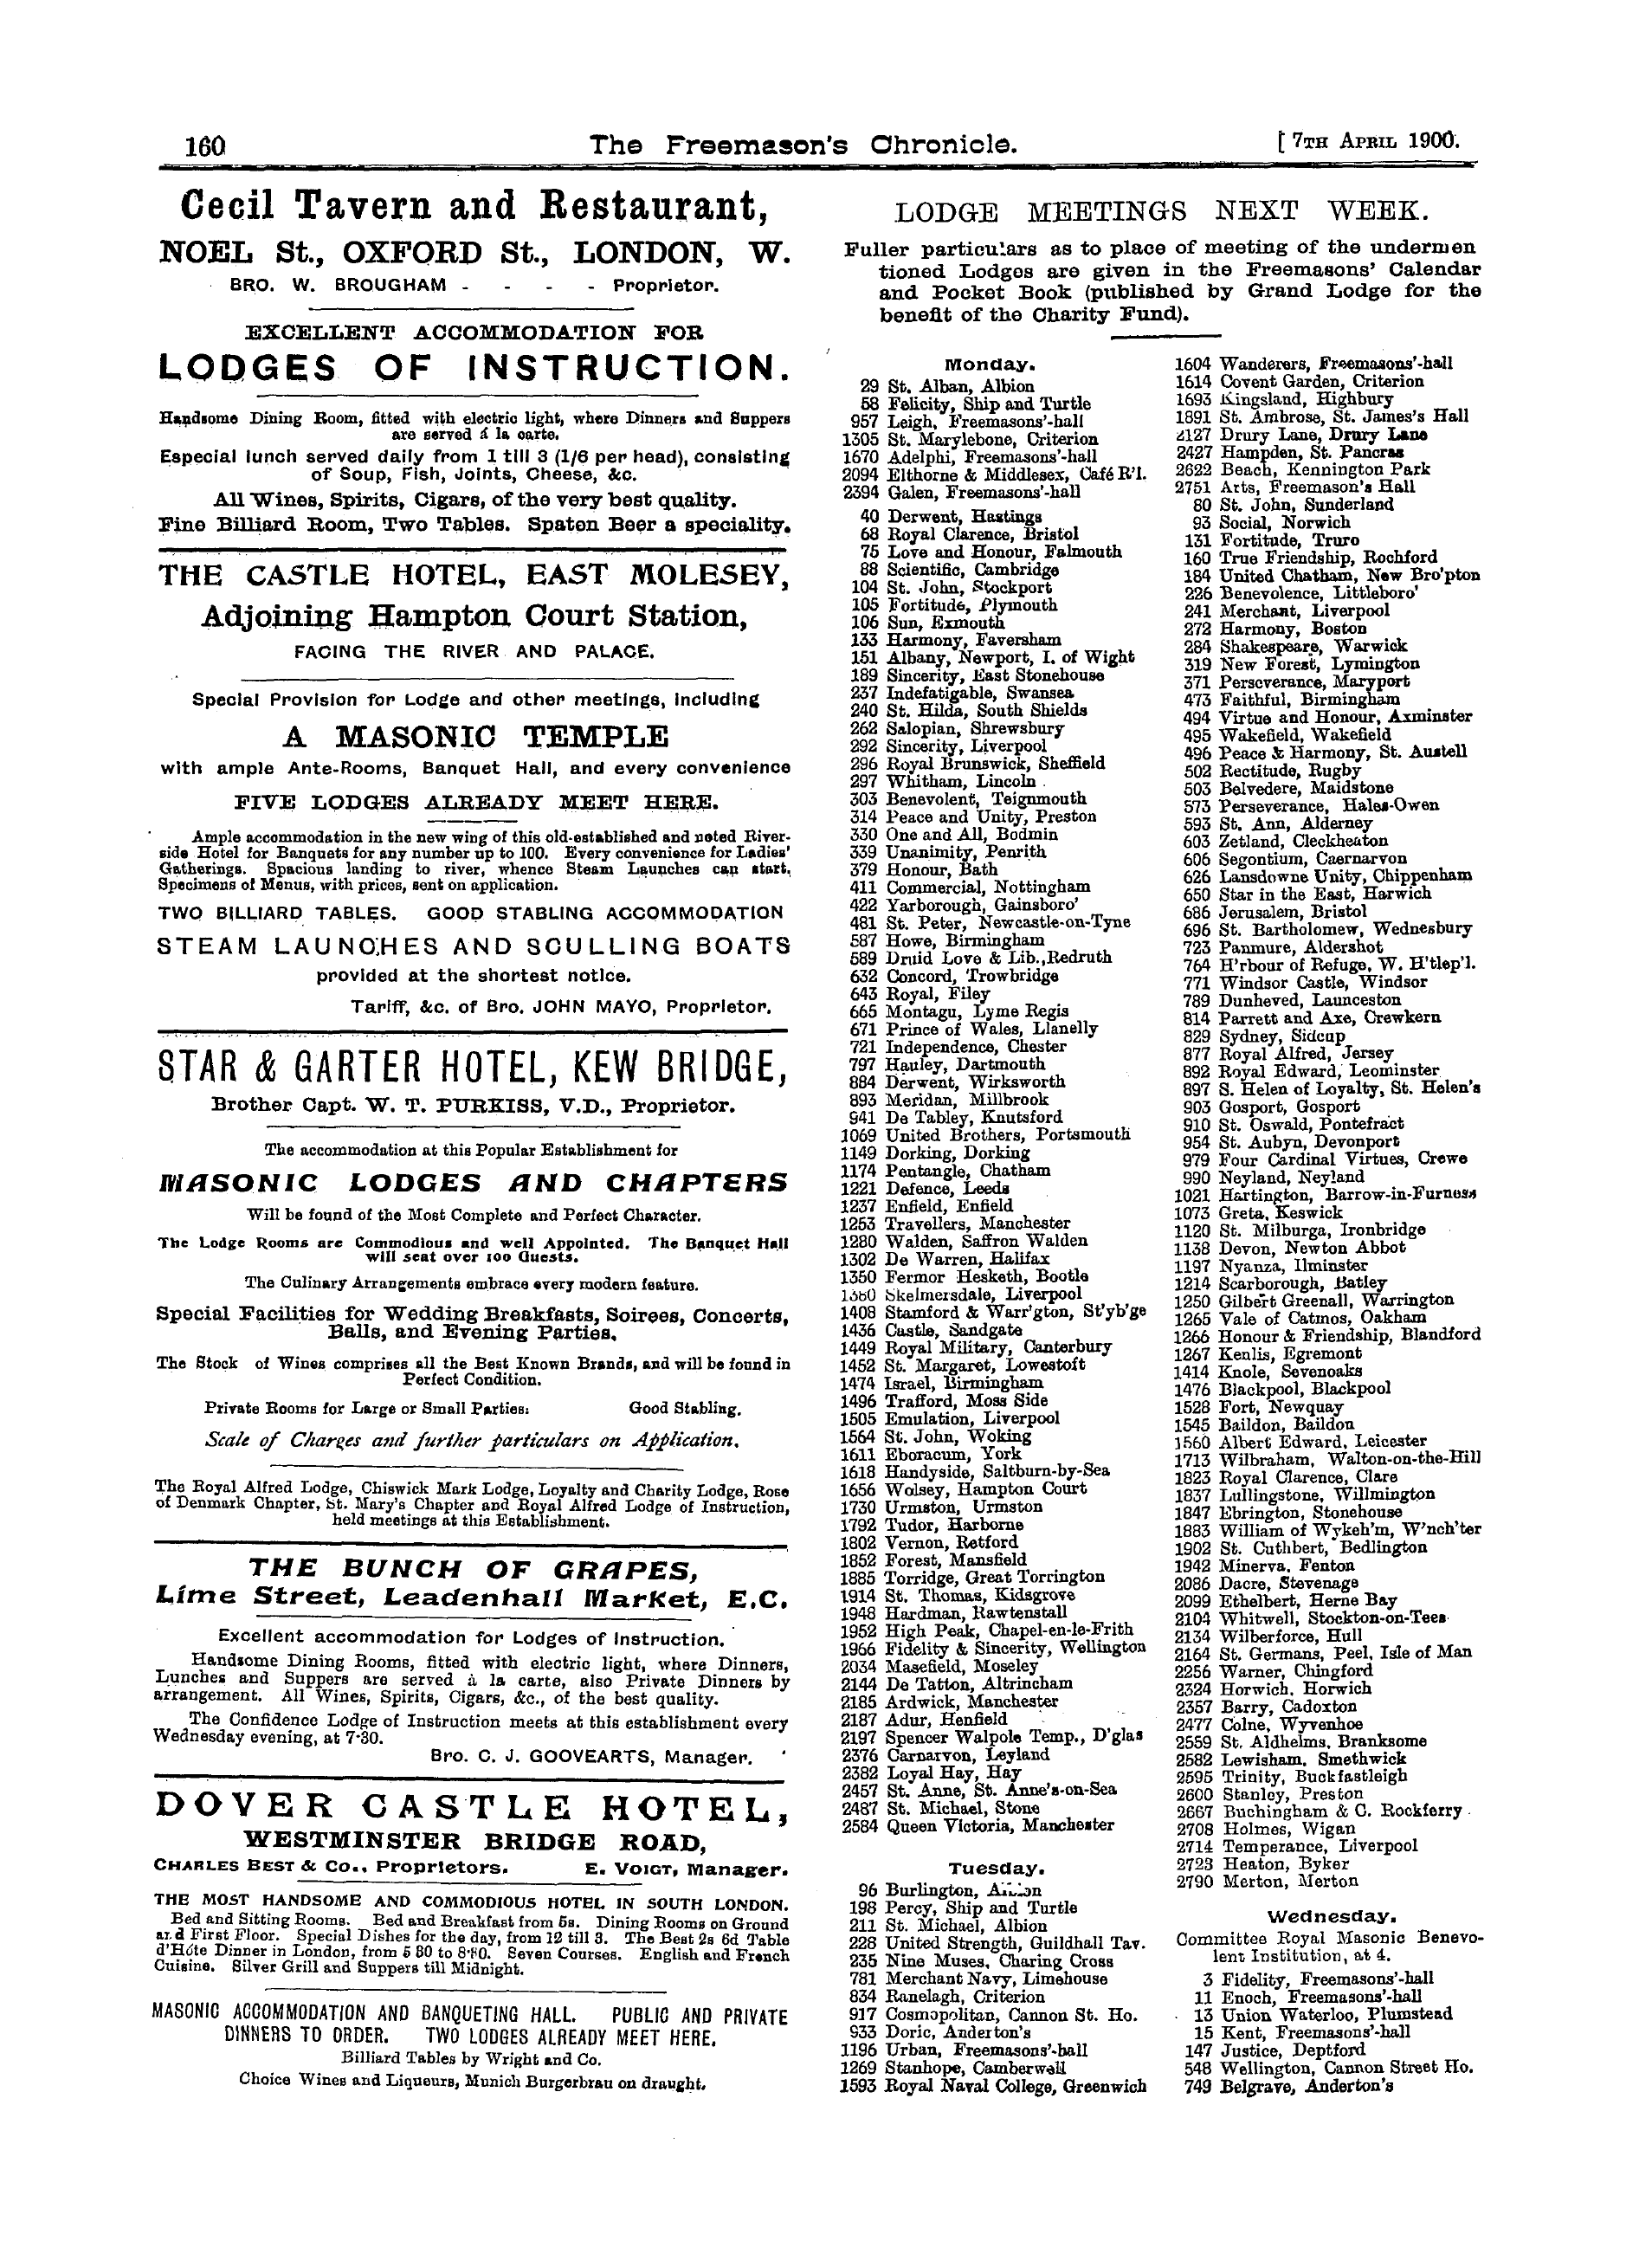 The Freemason's Chronicle: 1900-04-07 - Ad00405